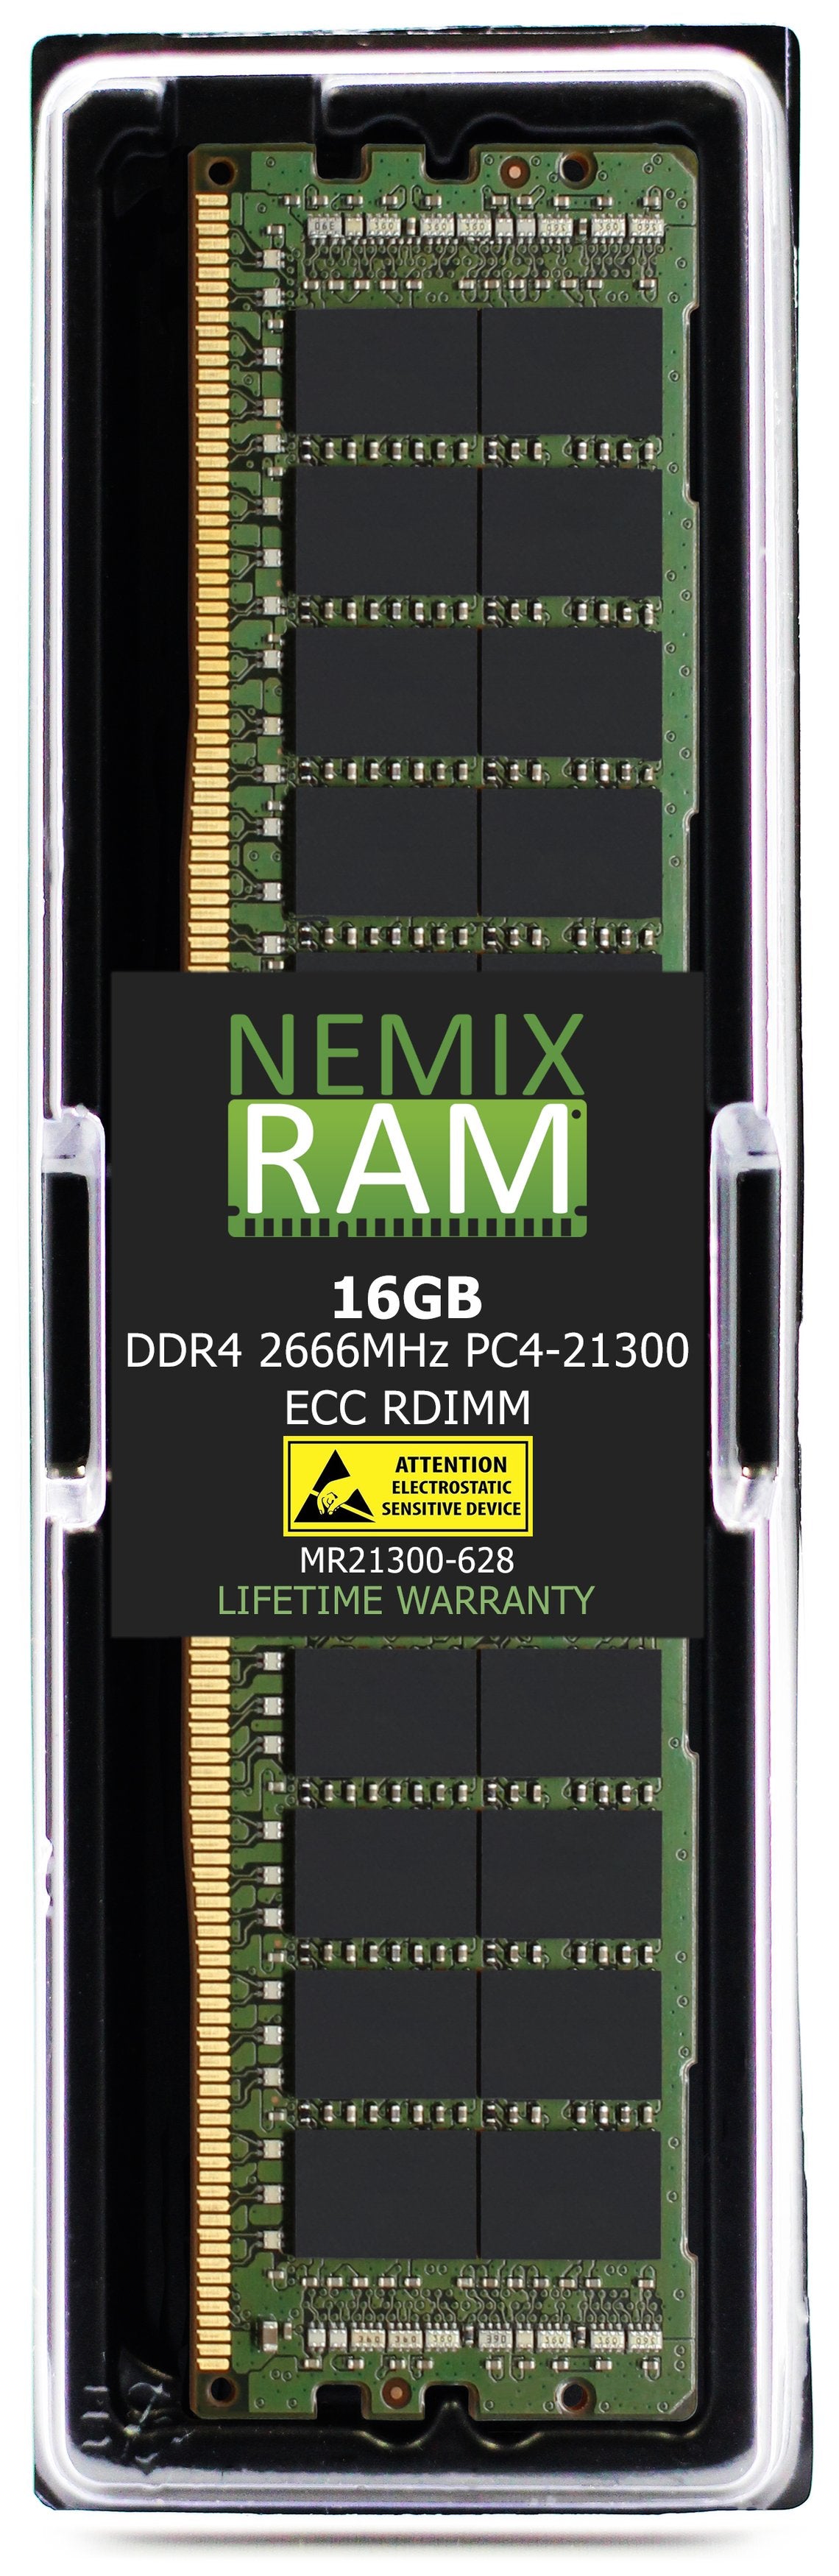 NEC Express5800 D120h Memory Module N8102-704F 16GB DDR4 2666MHZ PC4-21300 RDIMM